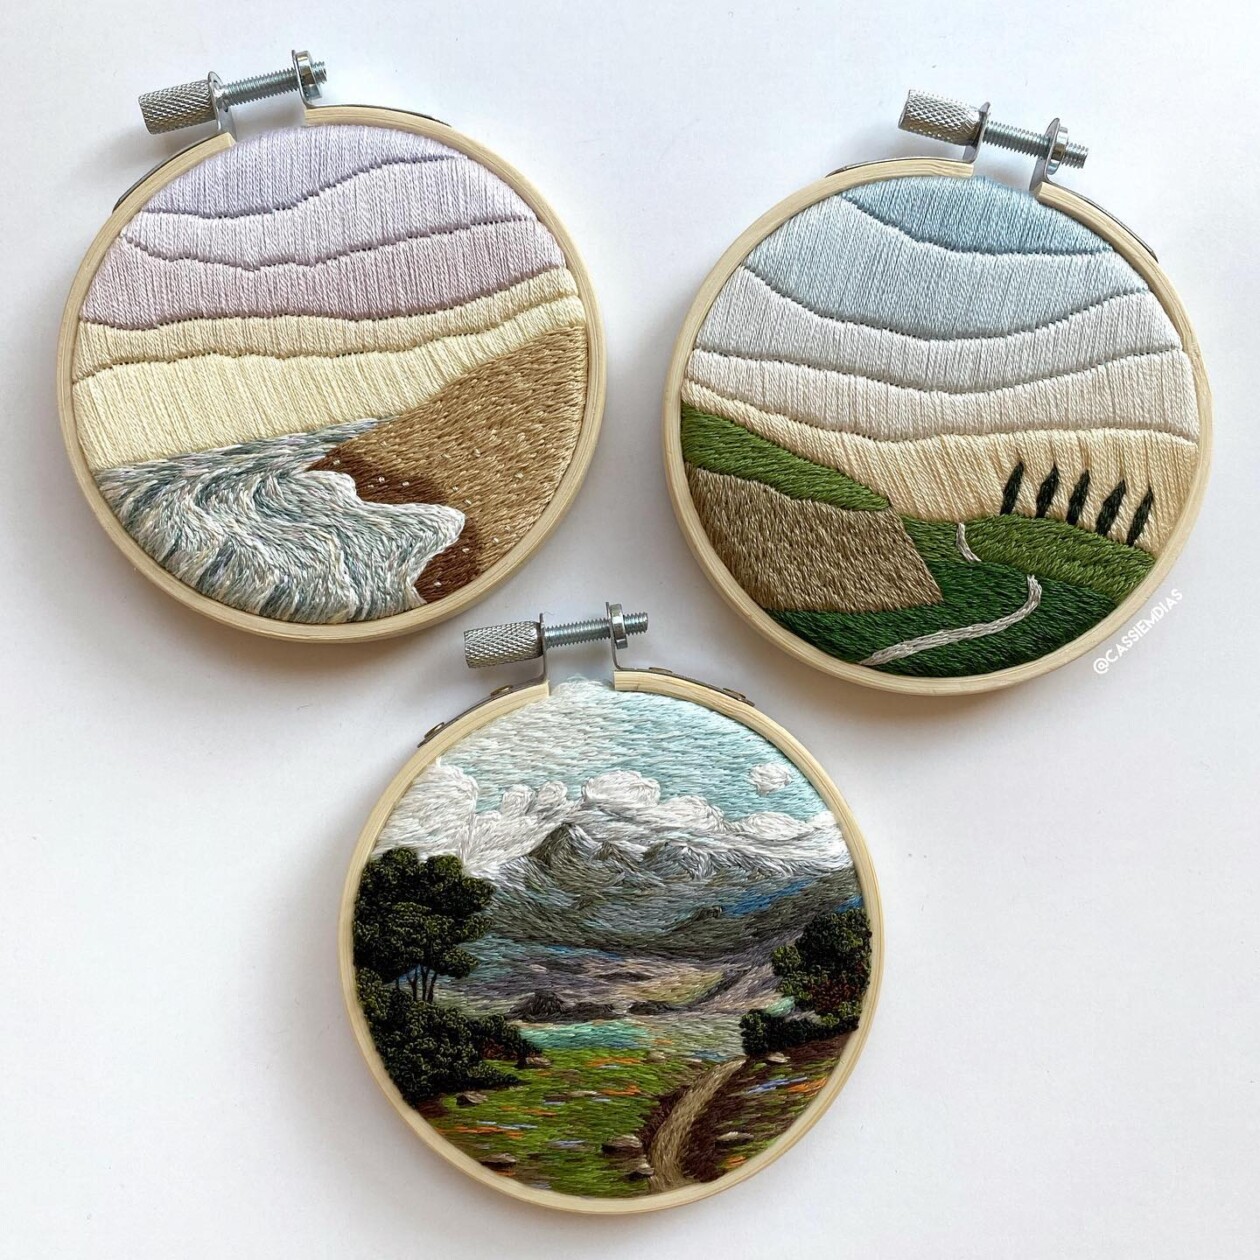 Wonderful Impressionistic Landscape Embroideries By Cassandra Dias (4)